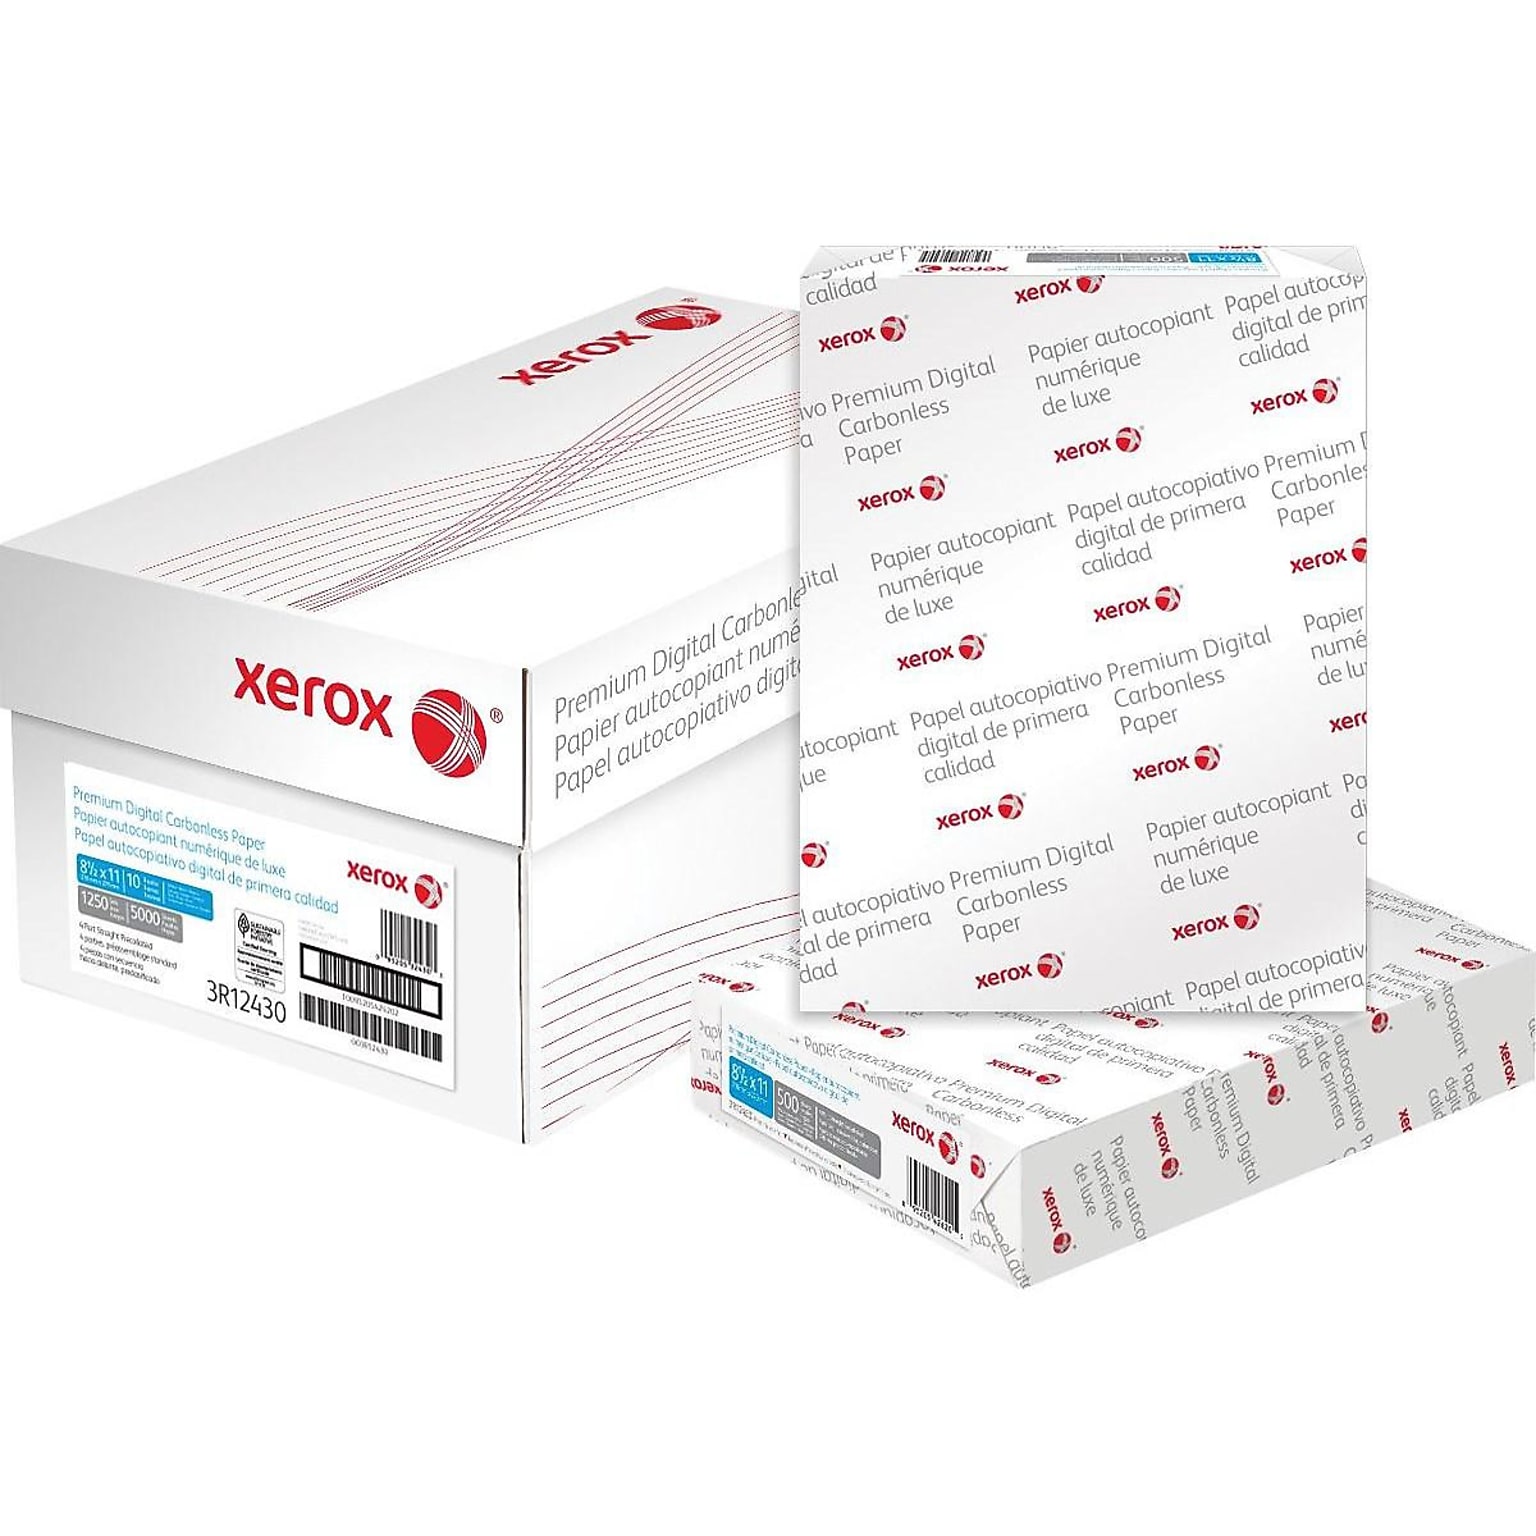 Xerox Revolution Carbonless Paper, 8.5 x 11, 20 lbs, 92 Brightness, 1250/Ream, 4 Reams/Carton (3R12430)